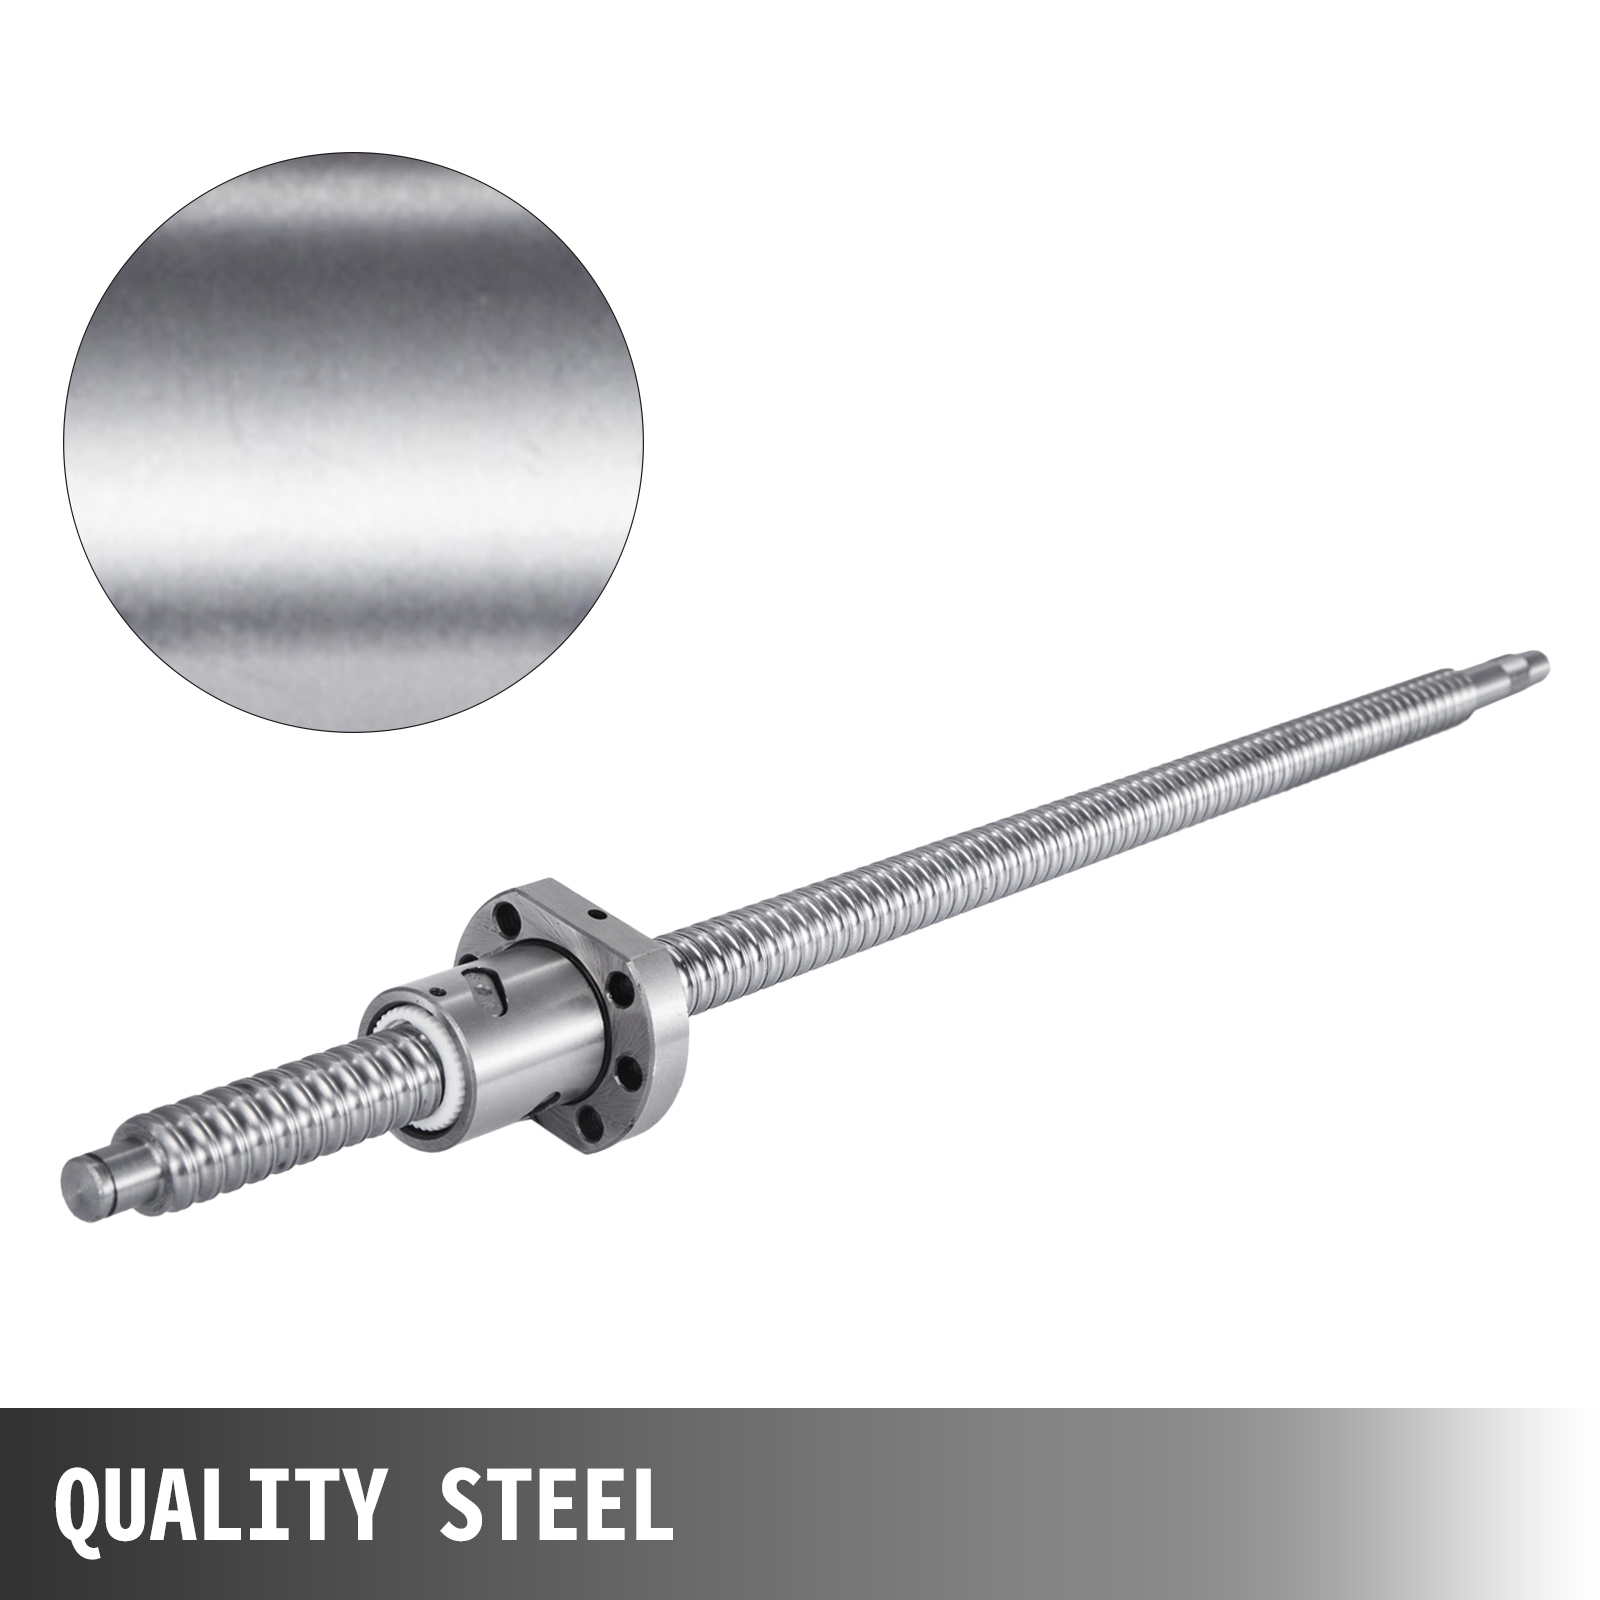 IGKE Bearing Steel RM1605 Ball Screw High Accuracy with Ball Nut SFU1605 Ball Screw for RM1605 for SFU1605